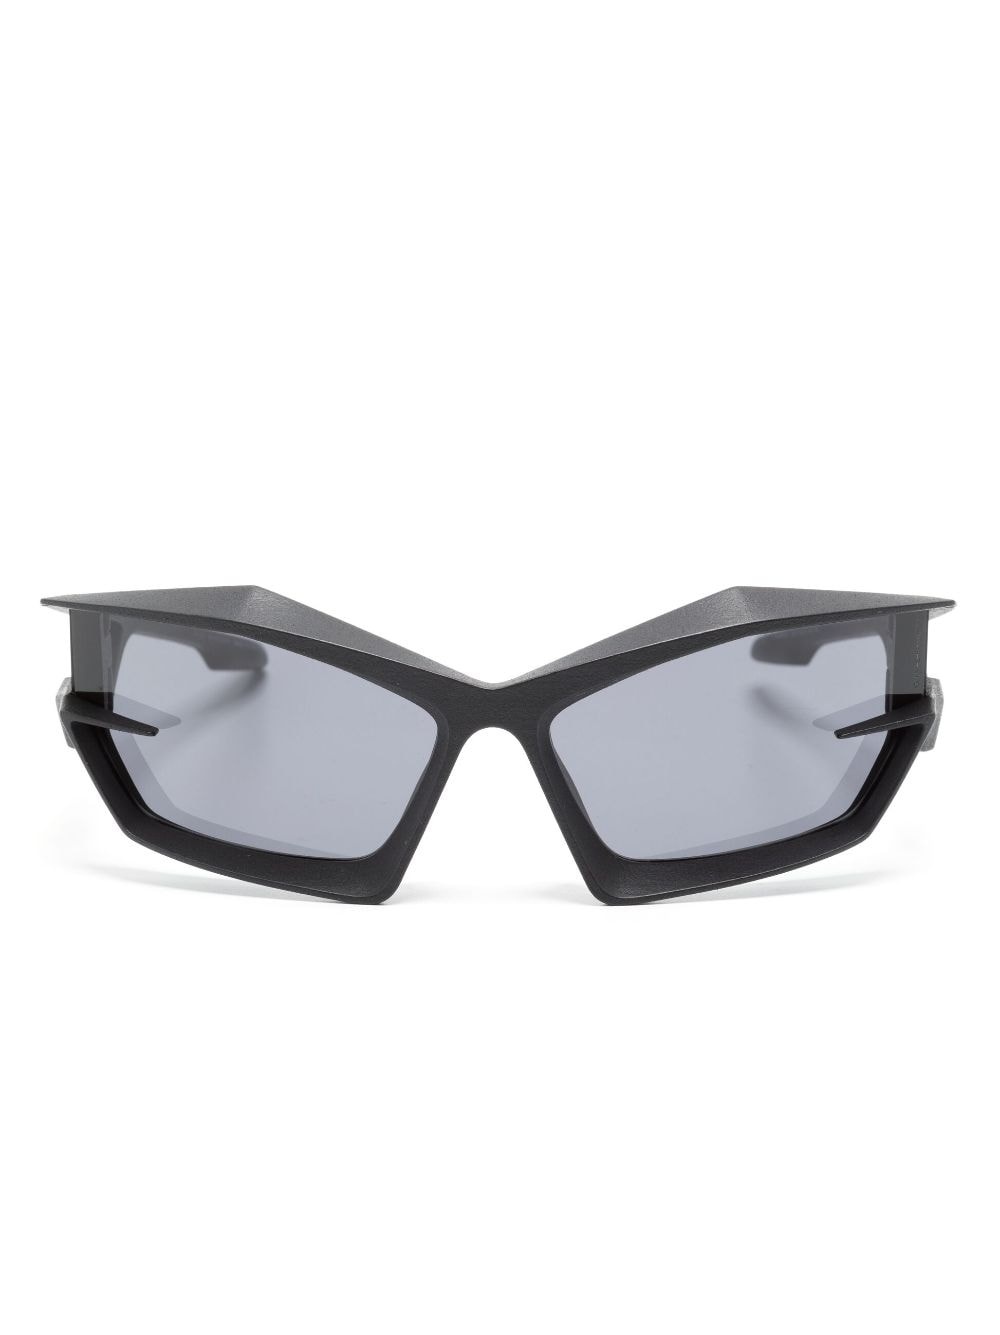 Giv Cut shield sunglasses - 1